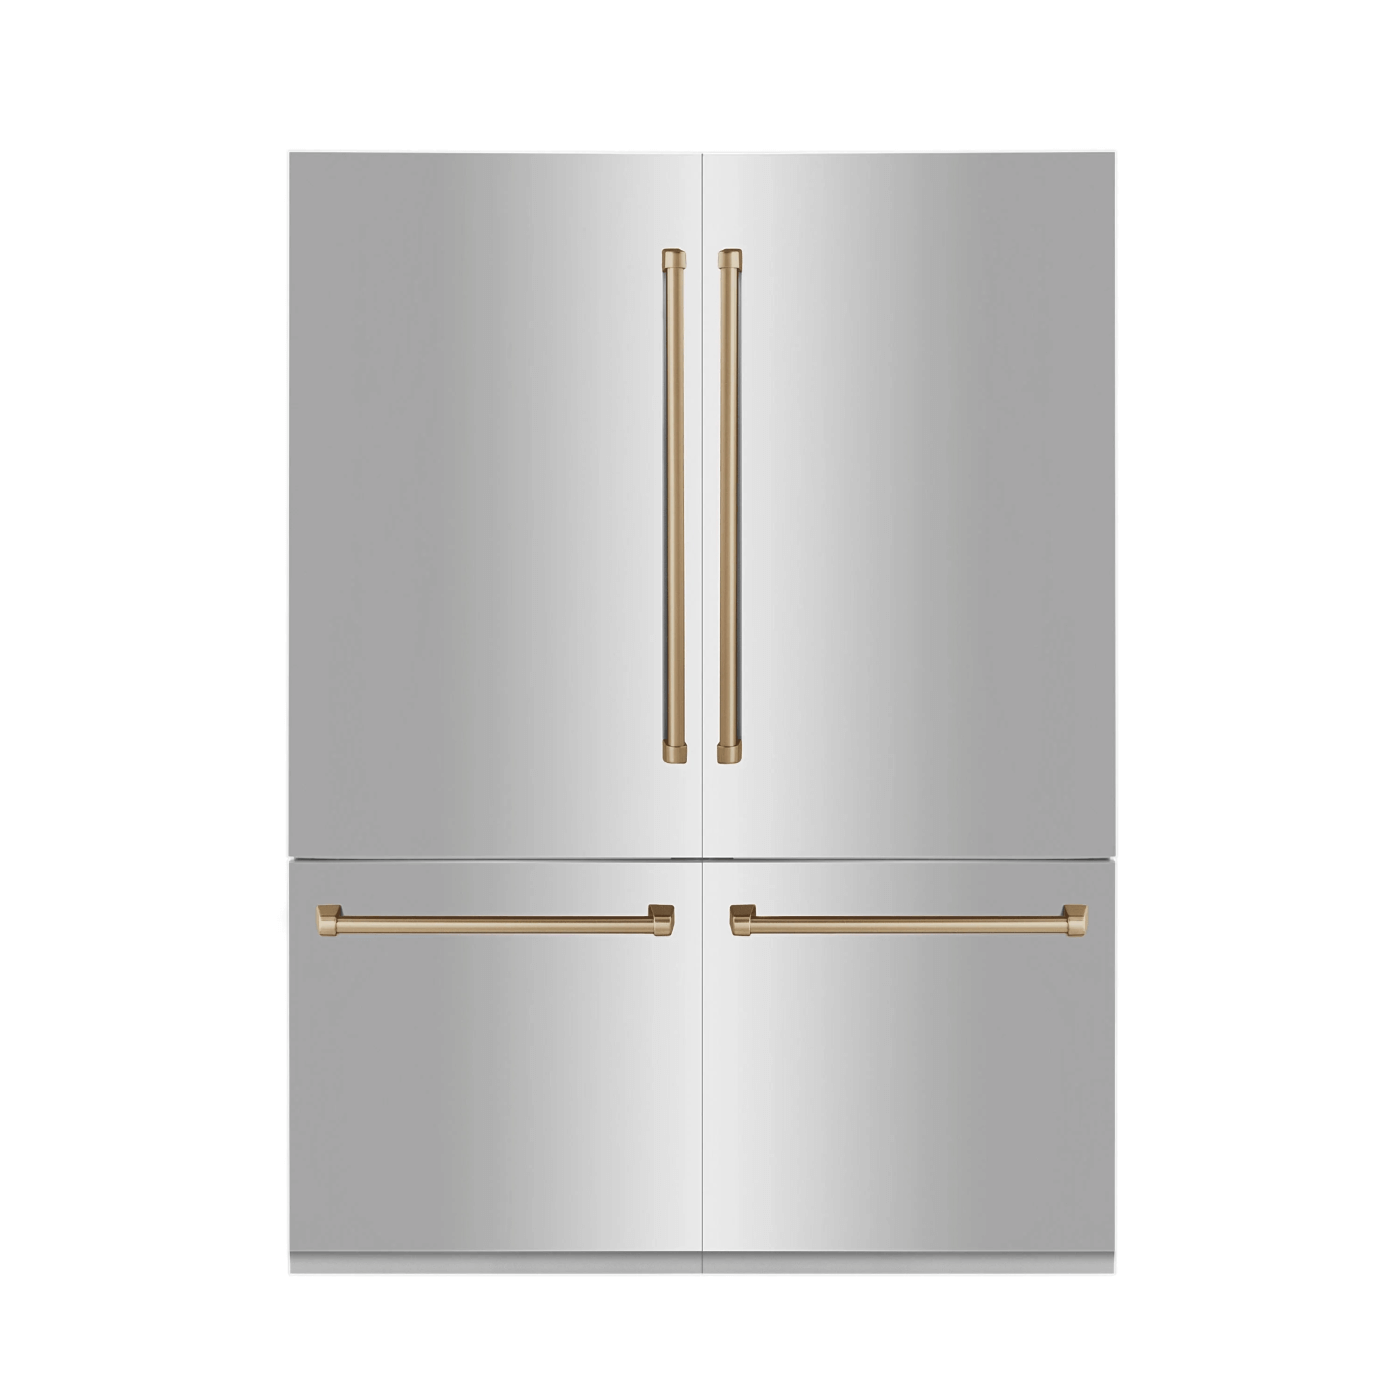 ZLINE Built-in Refrigerator